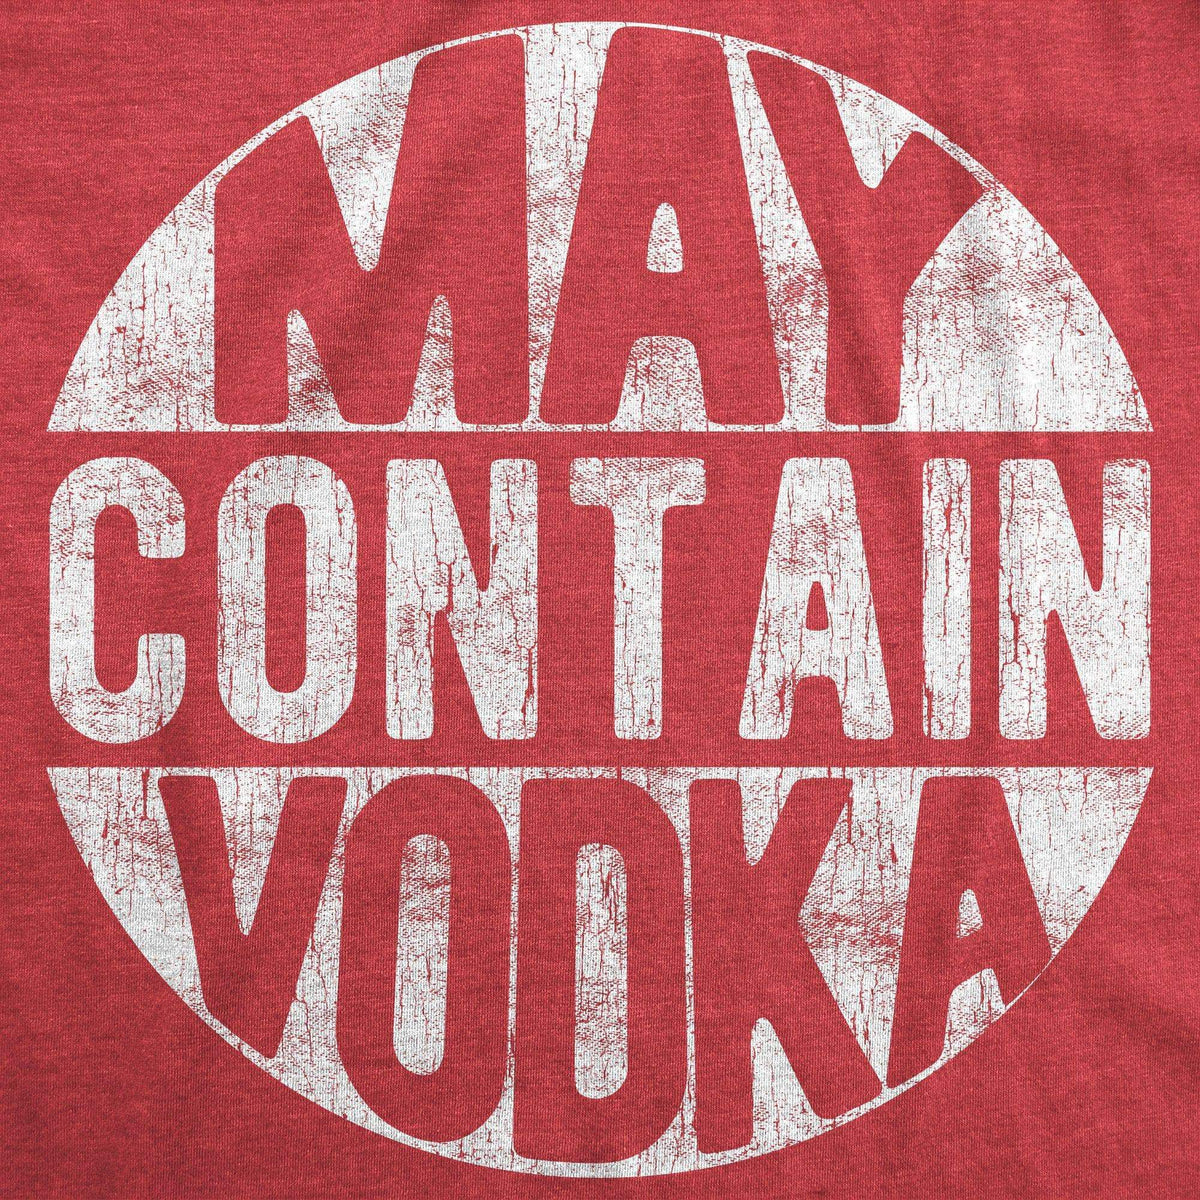 May Contain Vodka Women&#39;s Tshirt - Crazy Dog T-Shirts